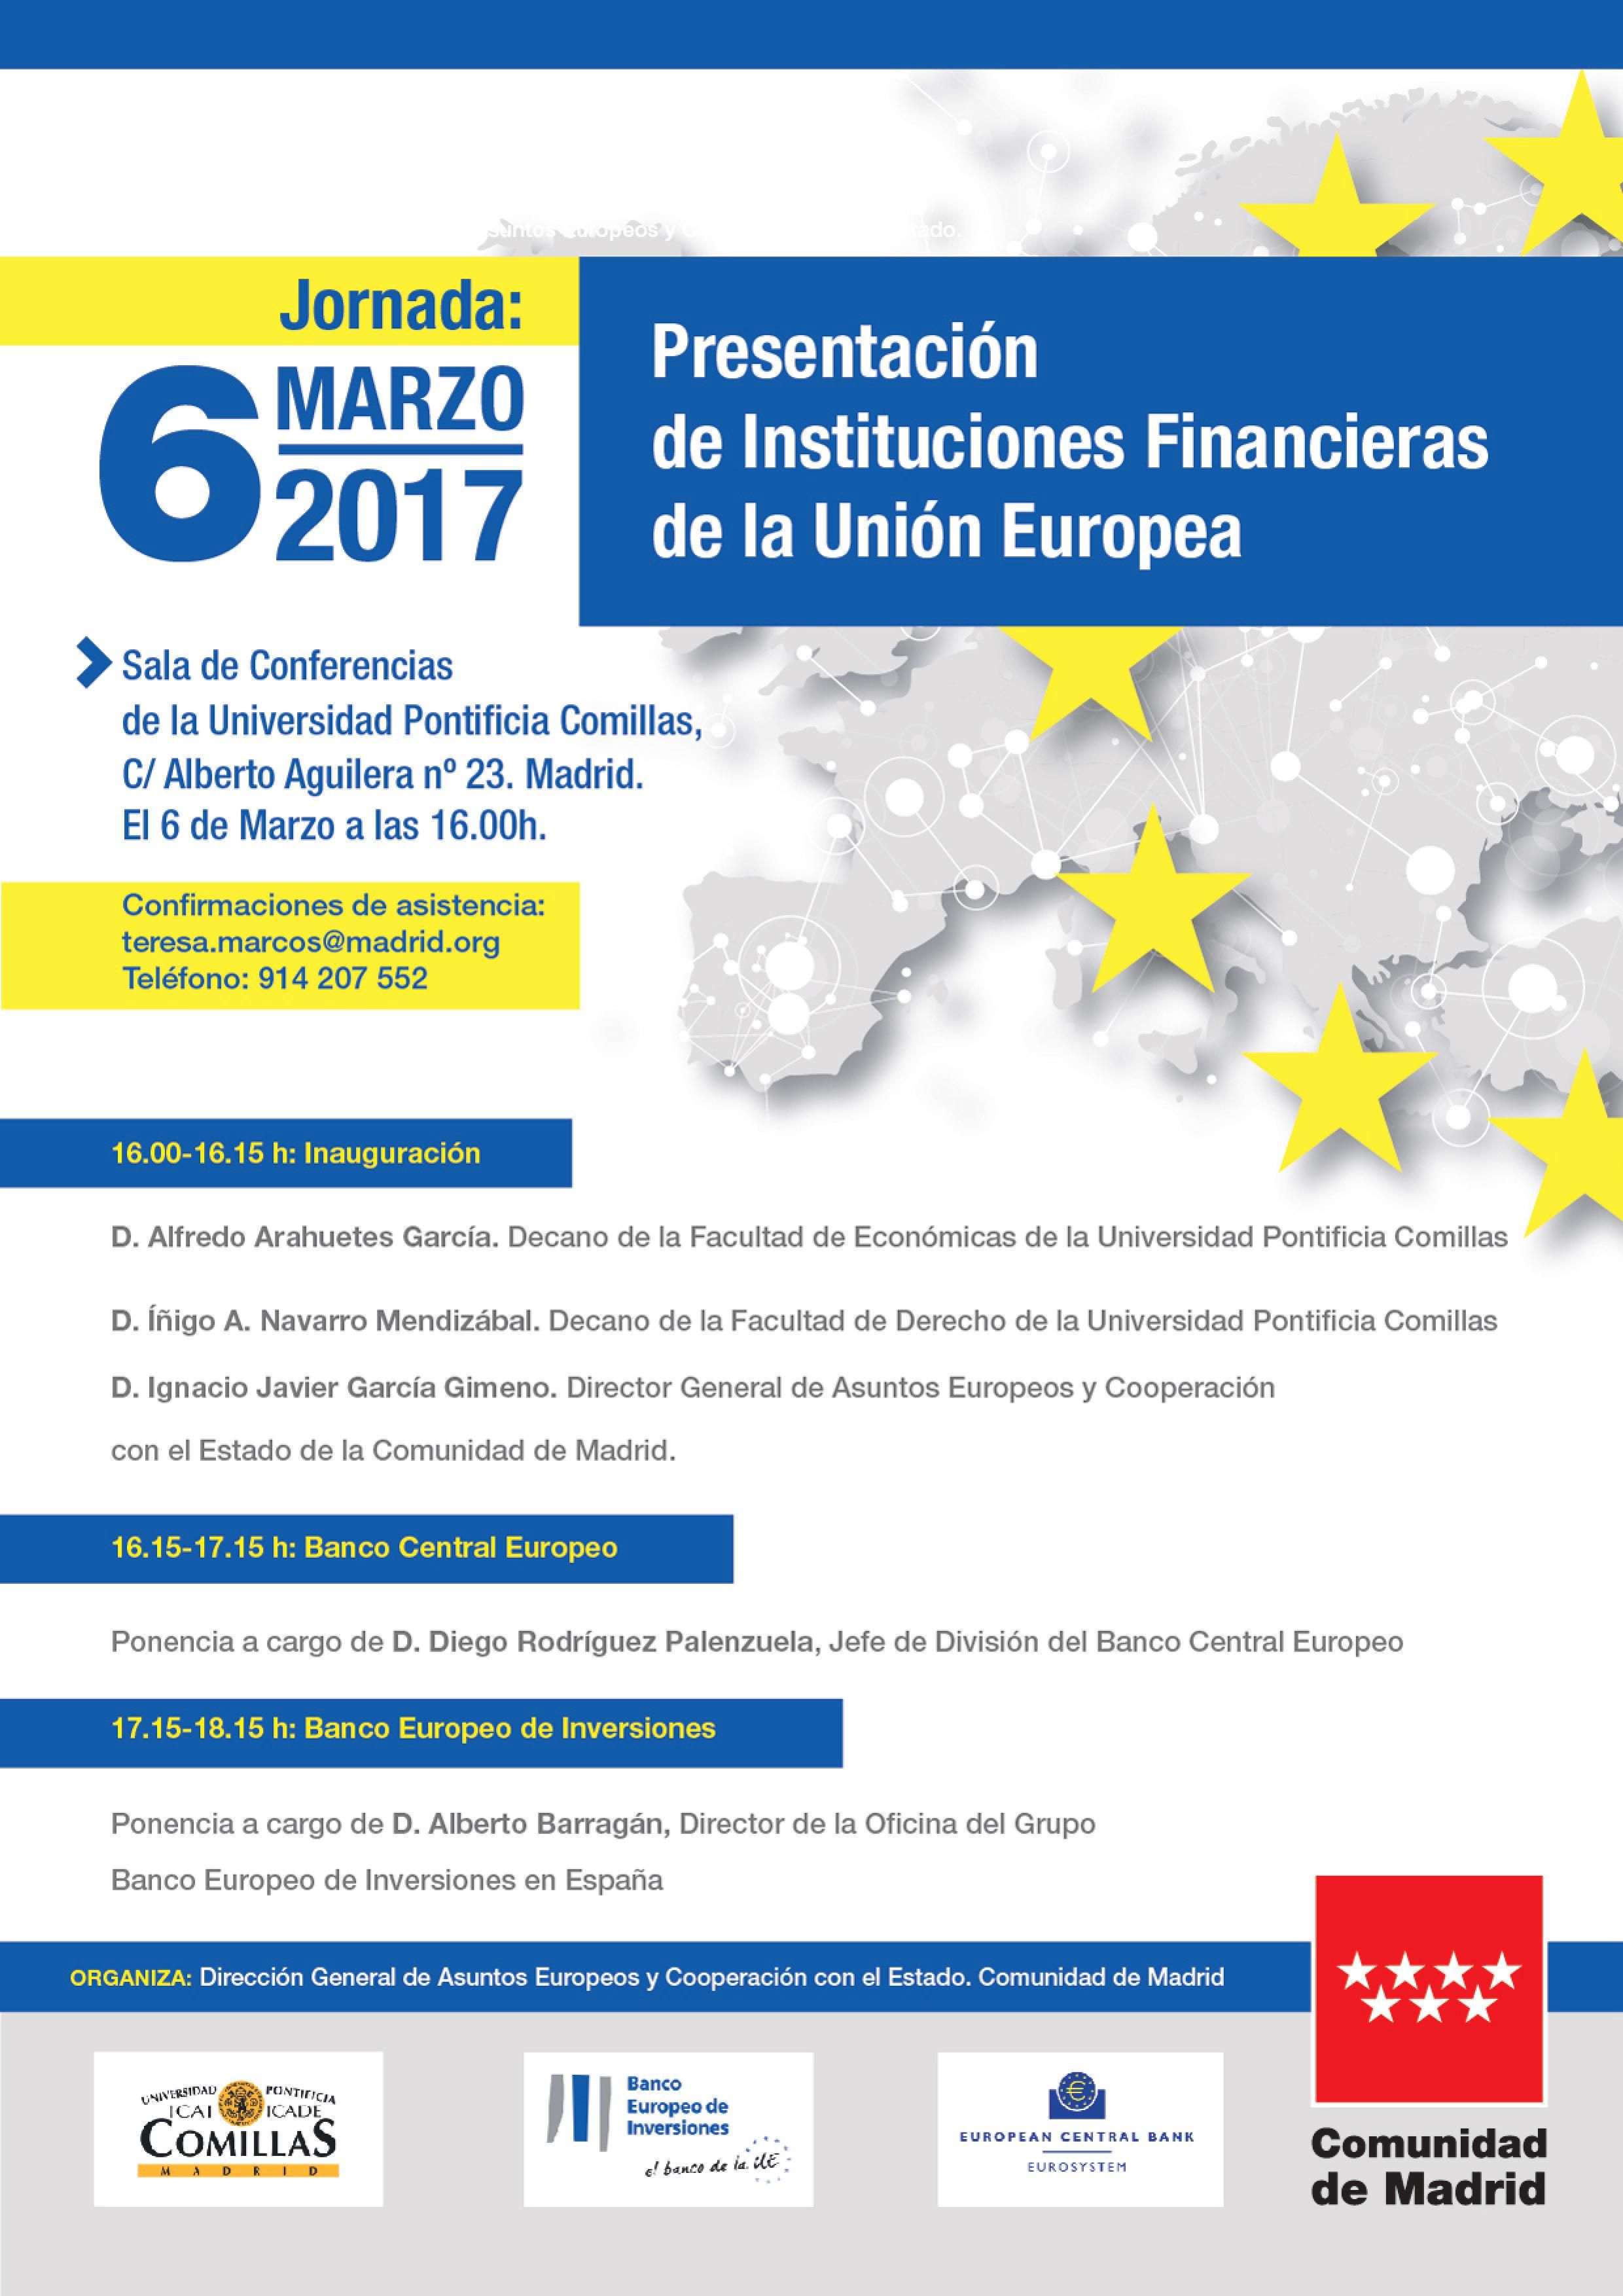 jonadas presentacion instituciones financieras de la union europea